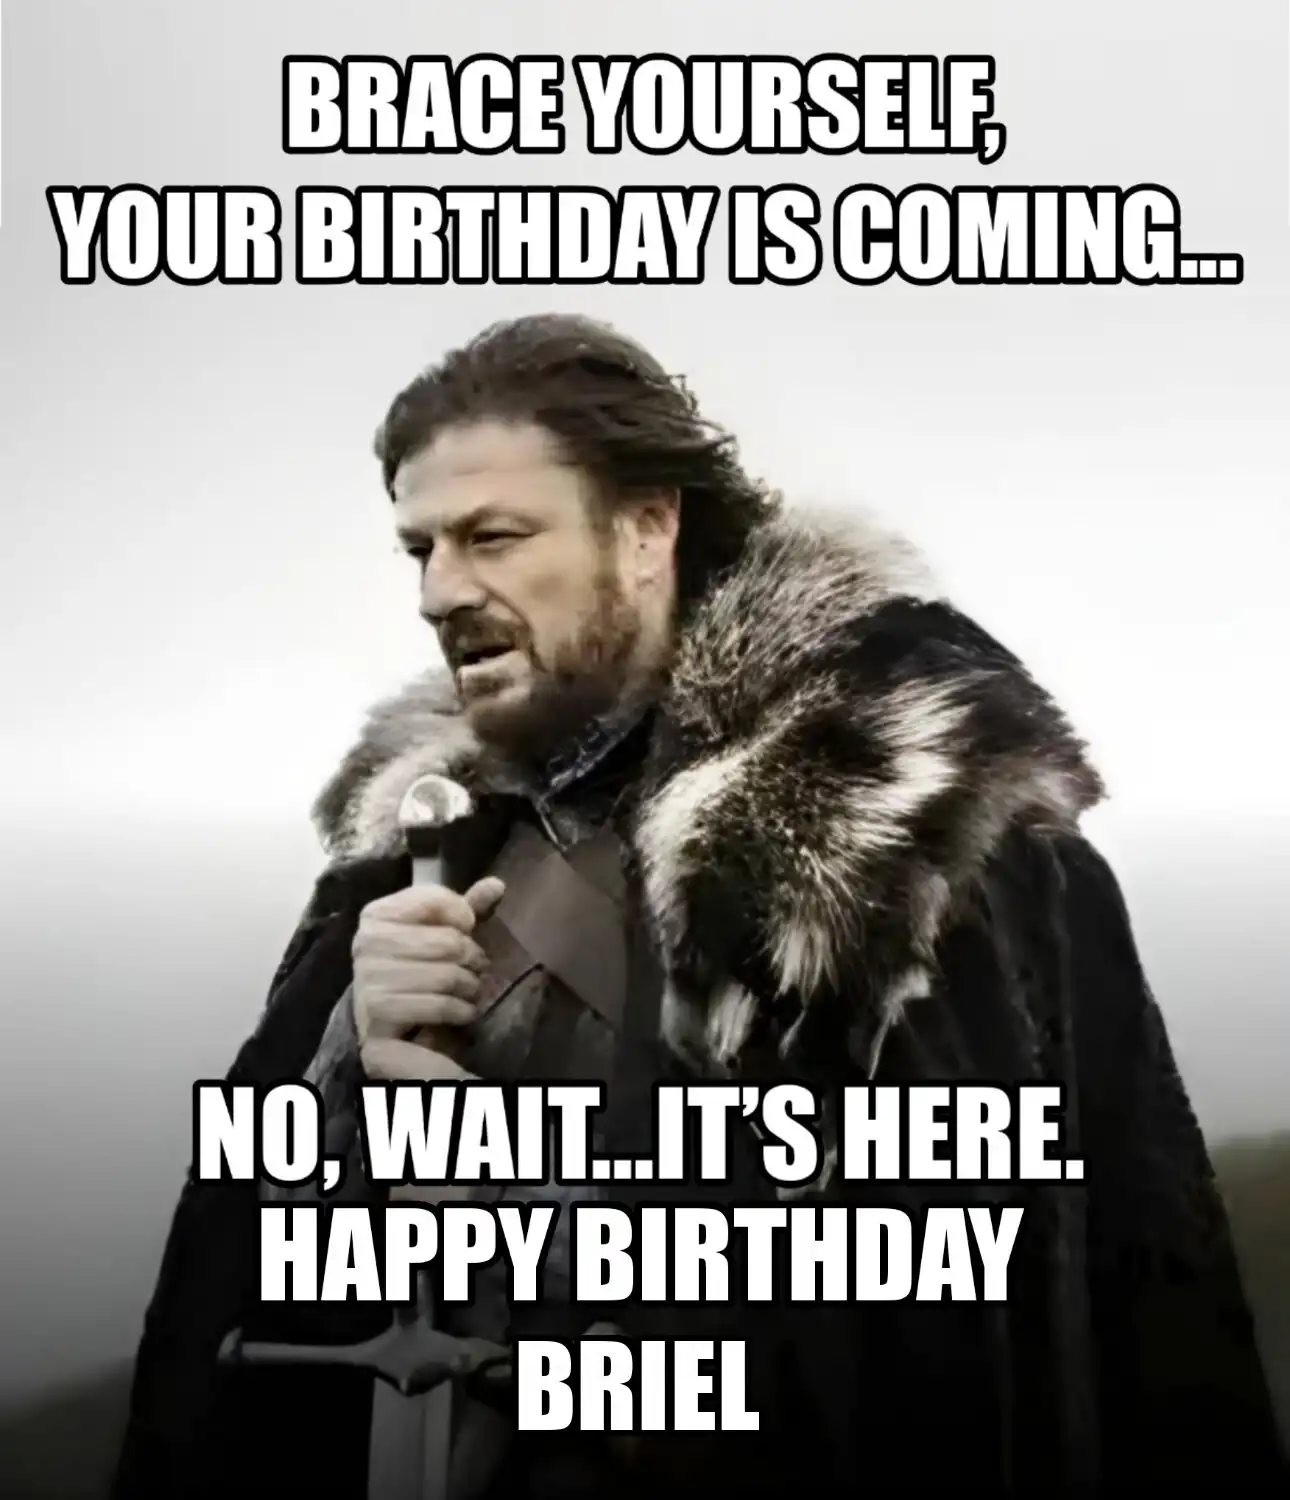 Happy Birthday Briel Brace Yourself Your Birthday Is Coming Meme